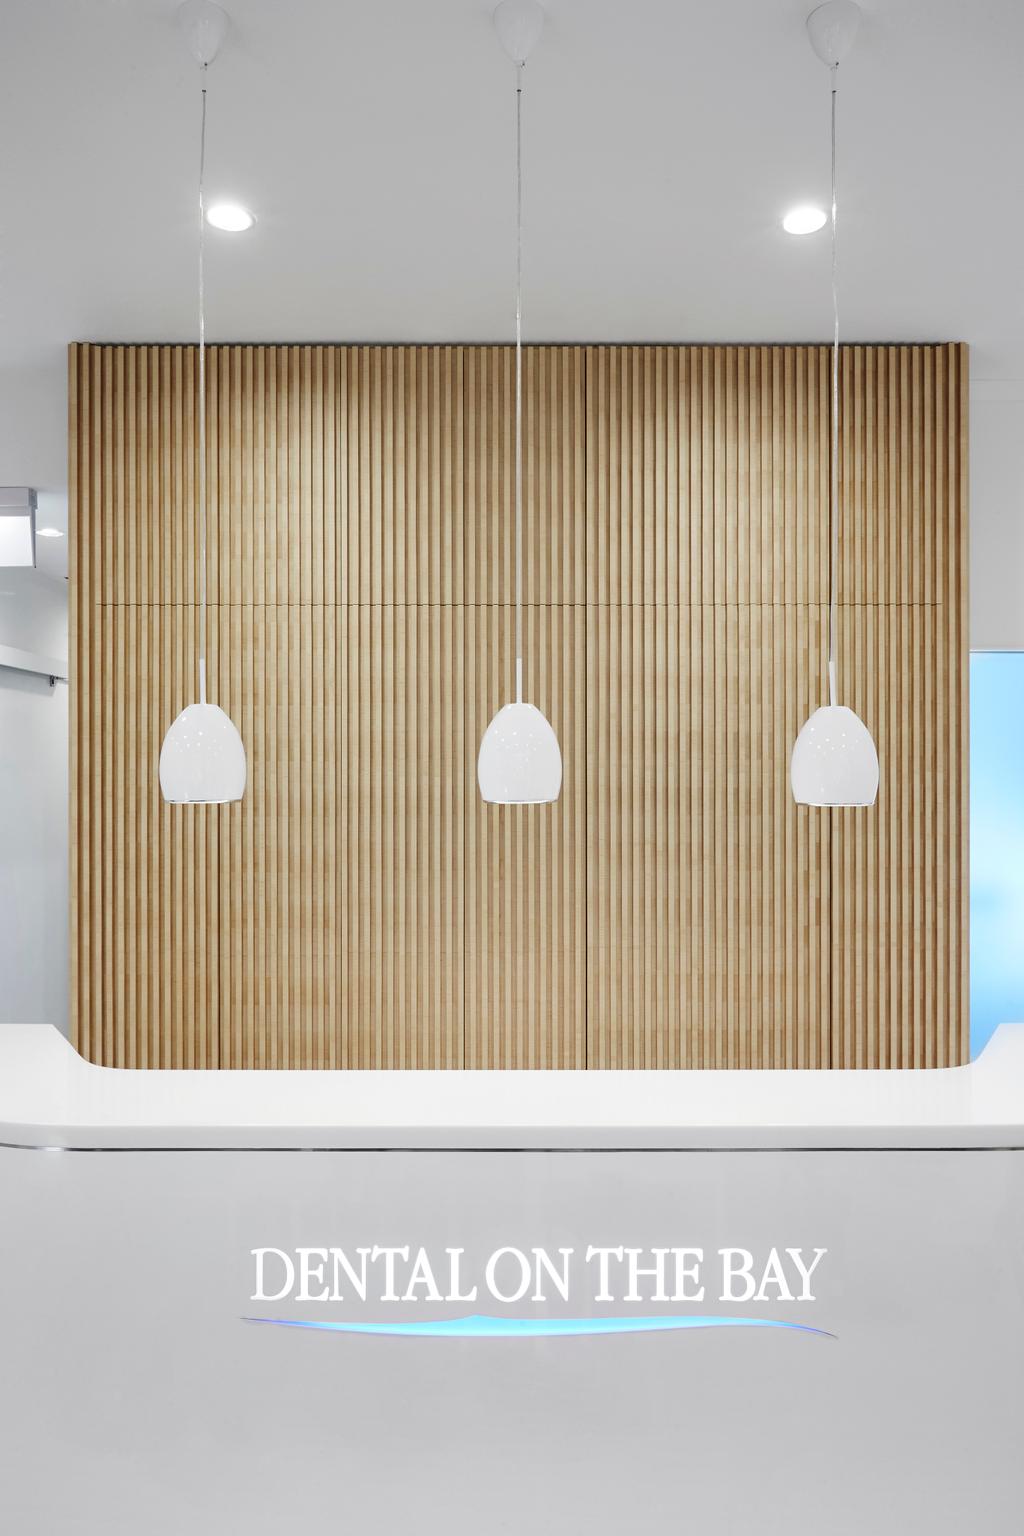 Dental on the Bay, Commercial, Interior Designer, akiHAUS, Minimalist, Lamp, Lampshade